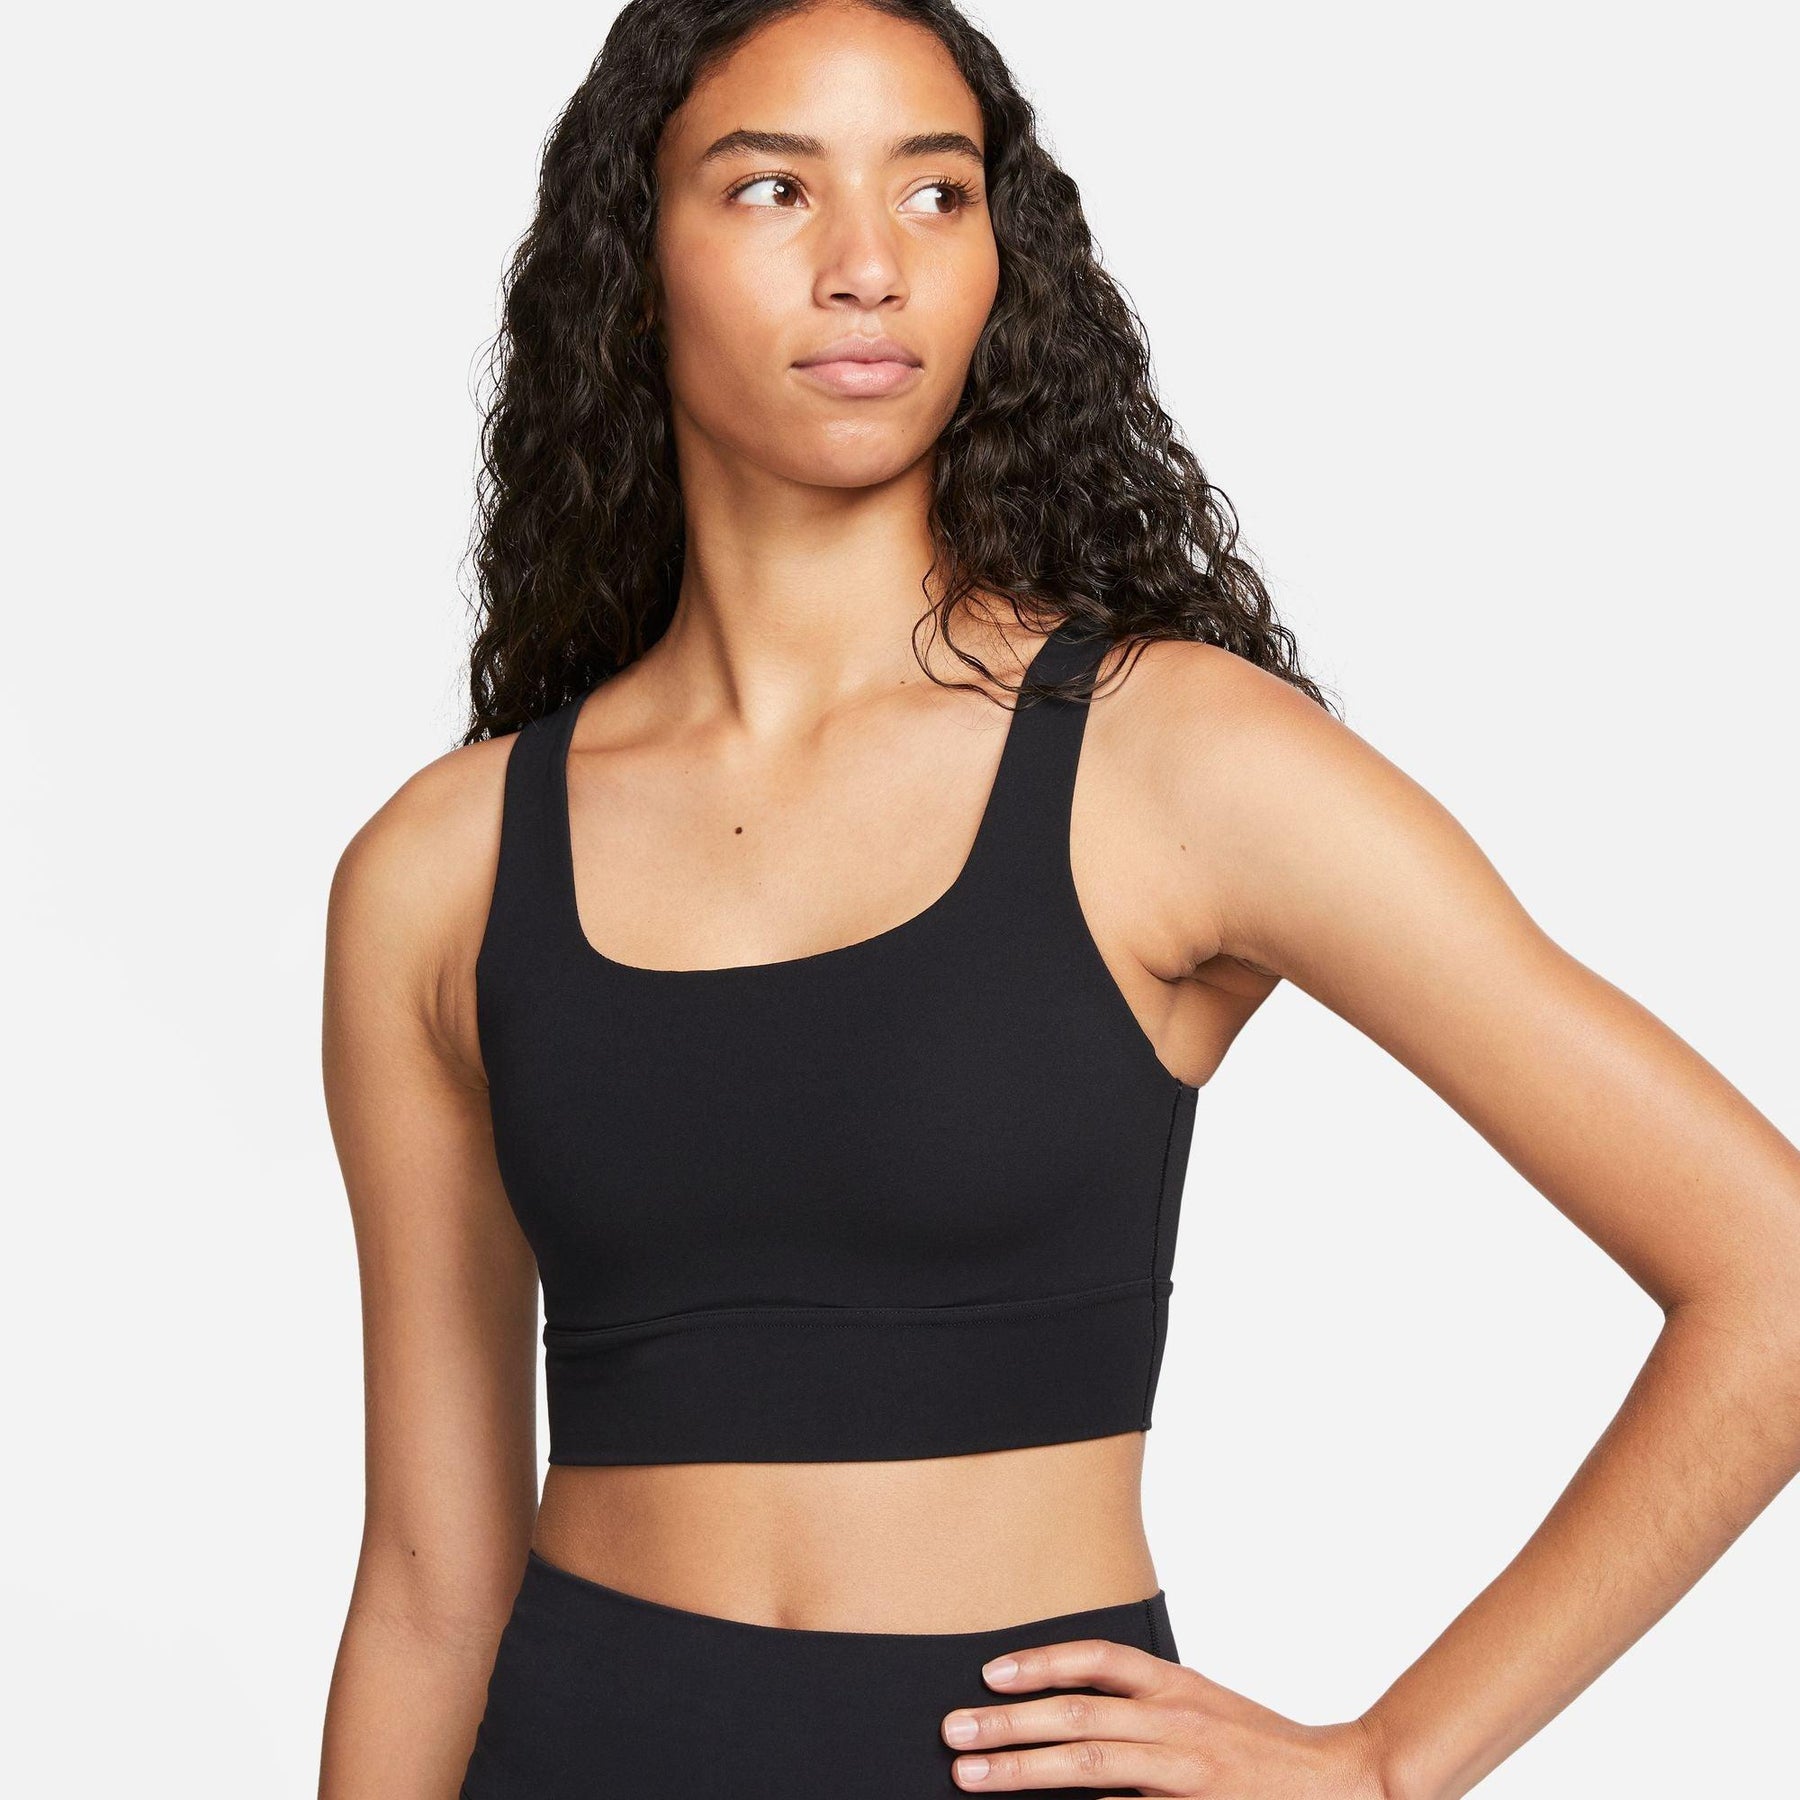 Buy Nike Women's Dri-FIT Swoosh Sports Bra (Plus Size) White in KSA -SSS